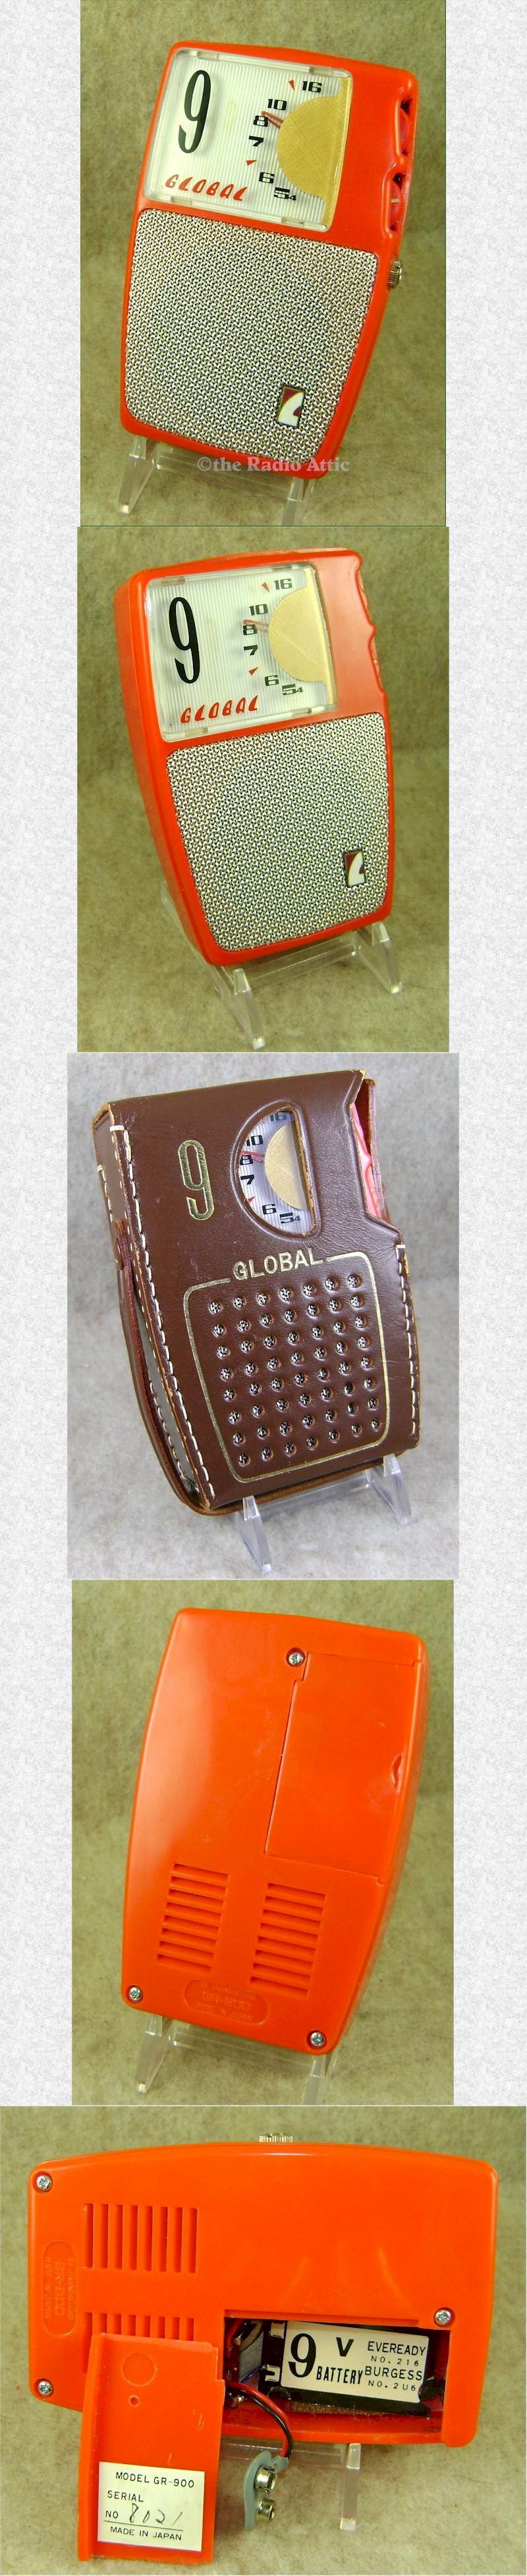 Global GR-900 